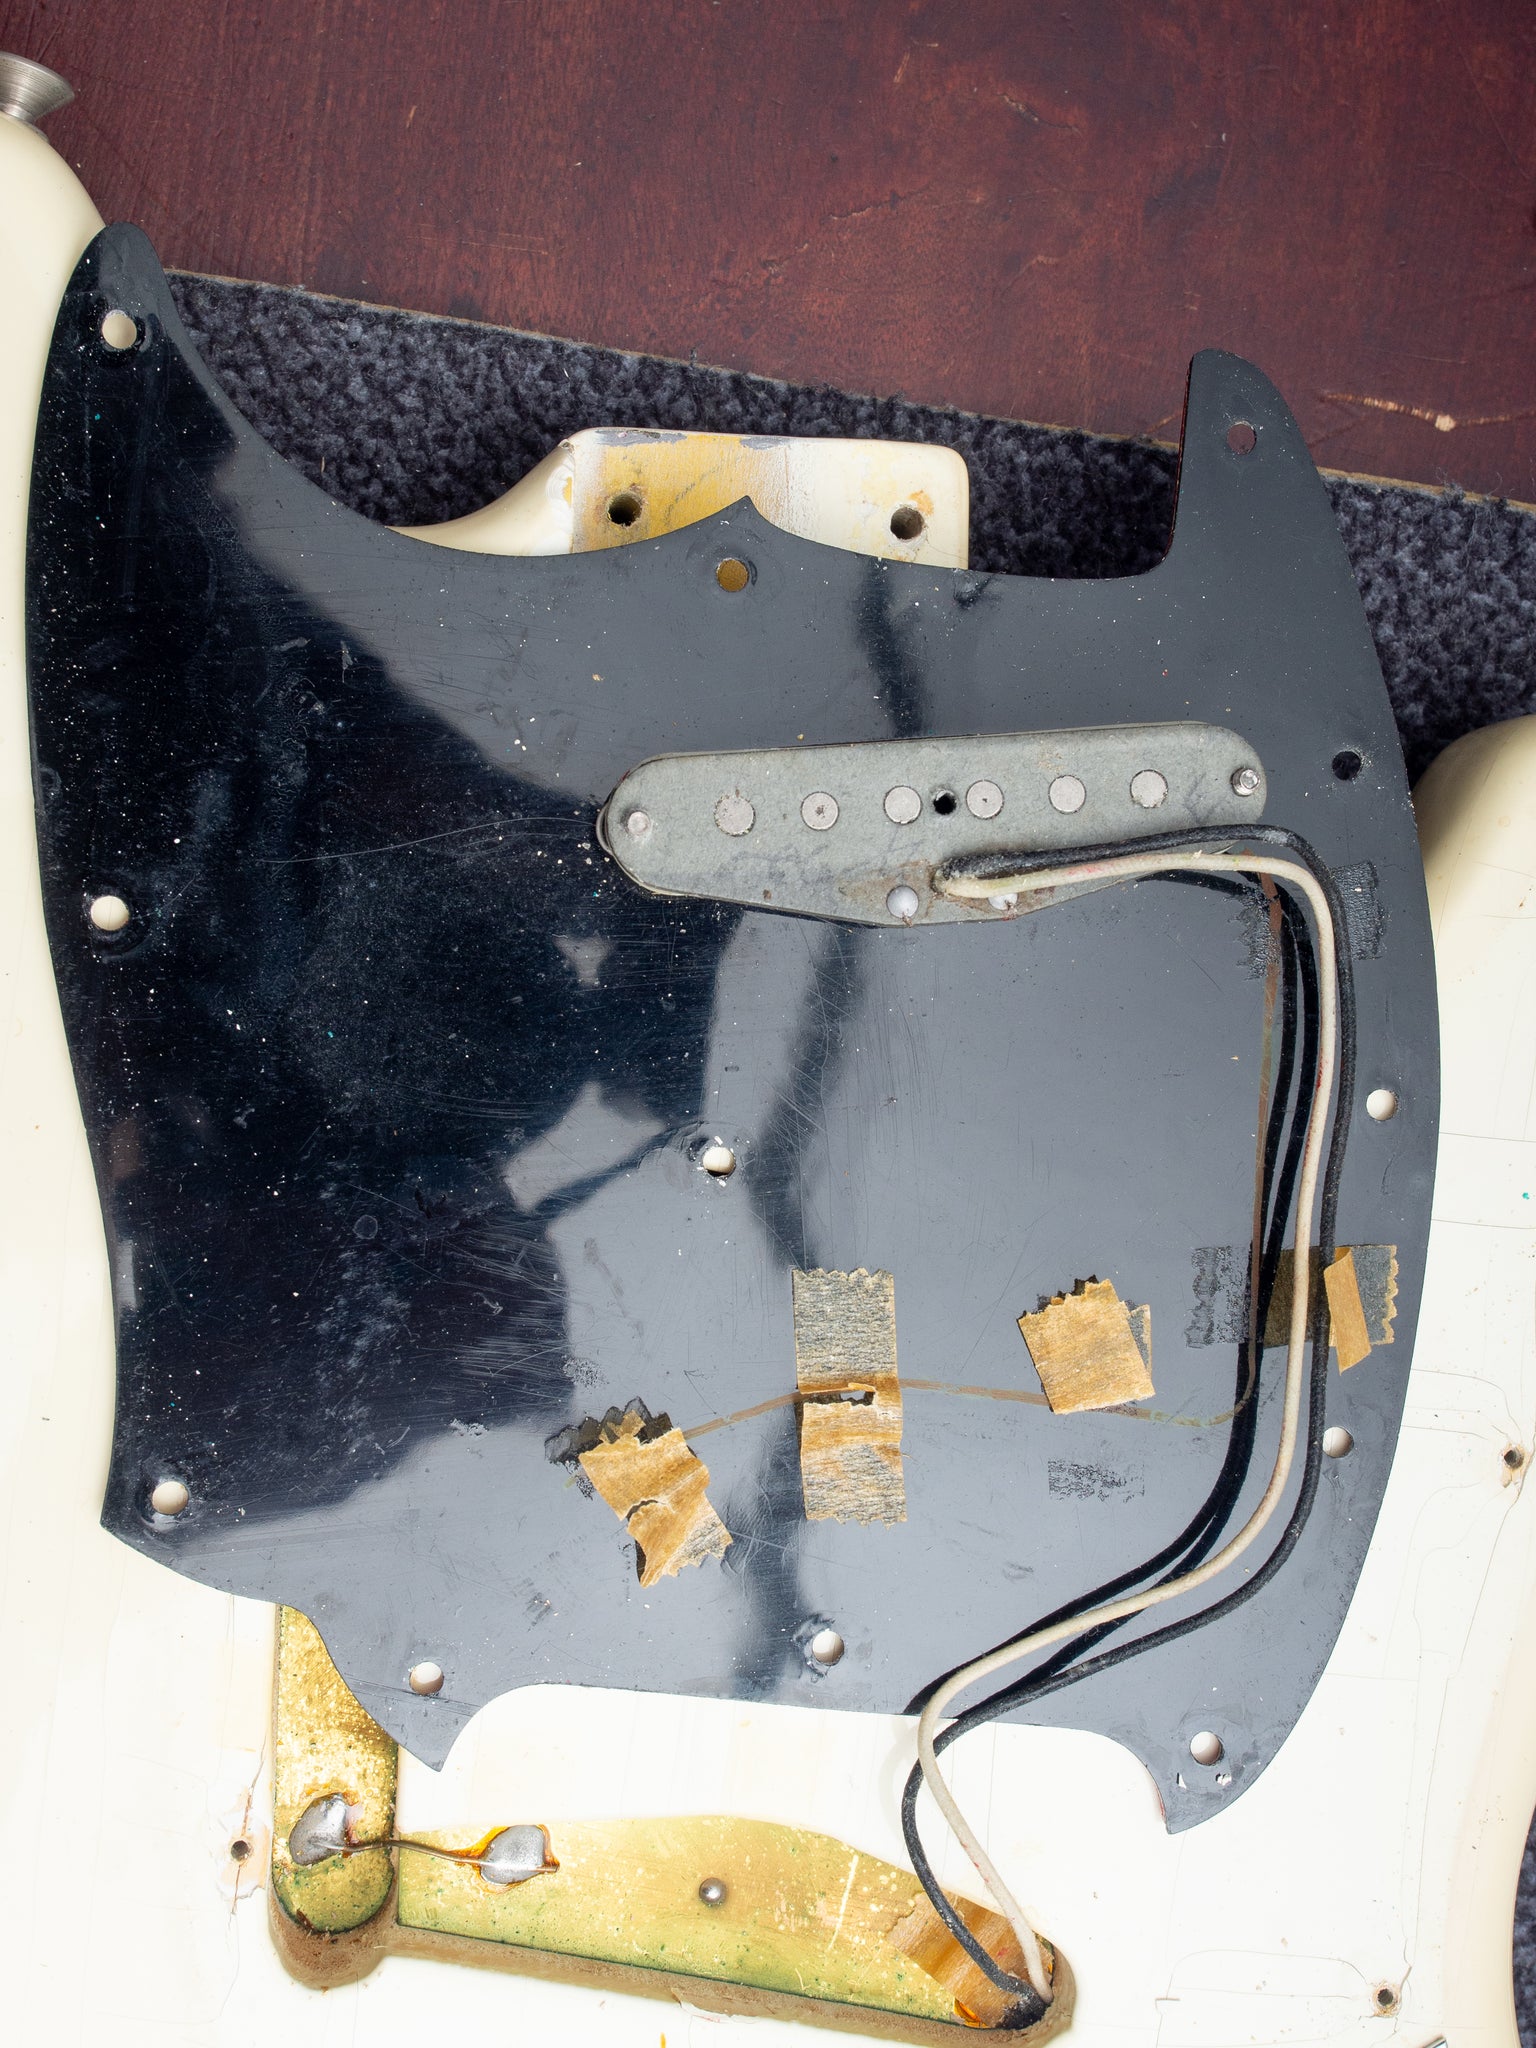 1966 Fender Musicmaster II